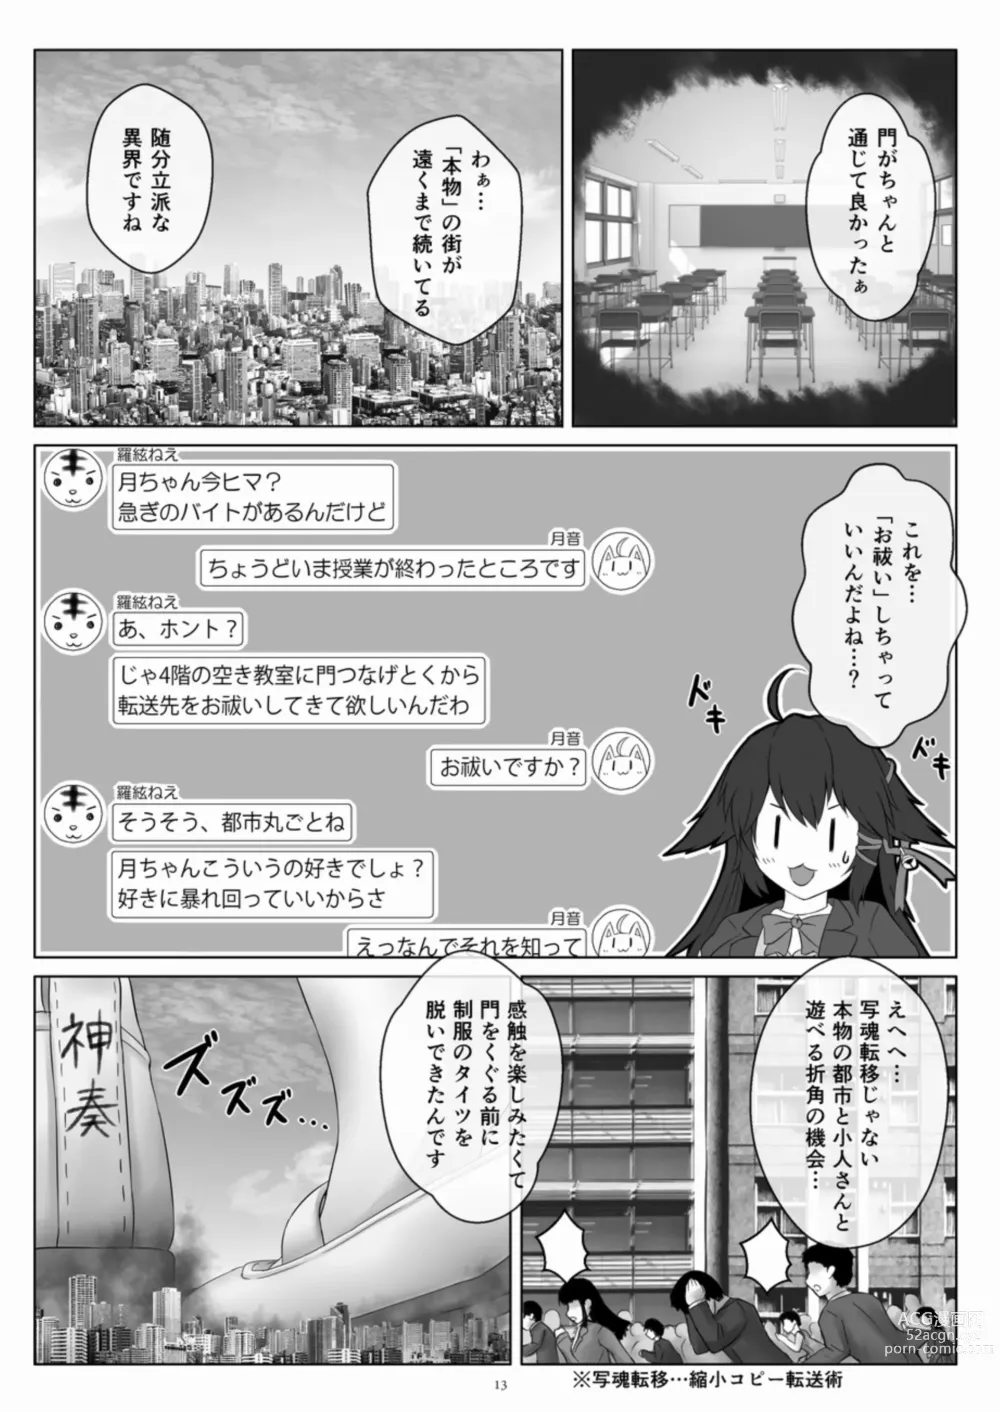 Page 13 of doujinshi Tenshin Ranman Gigantic 8